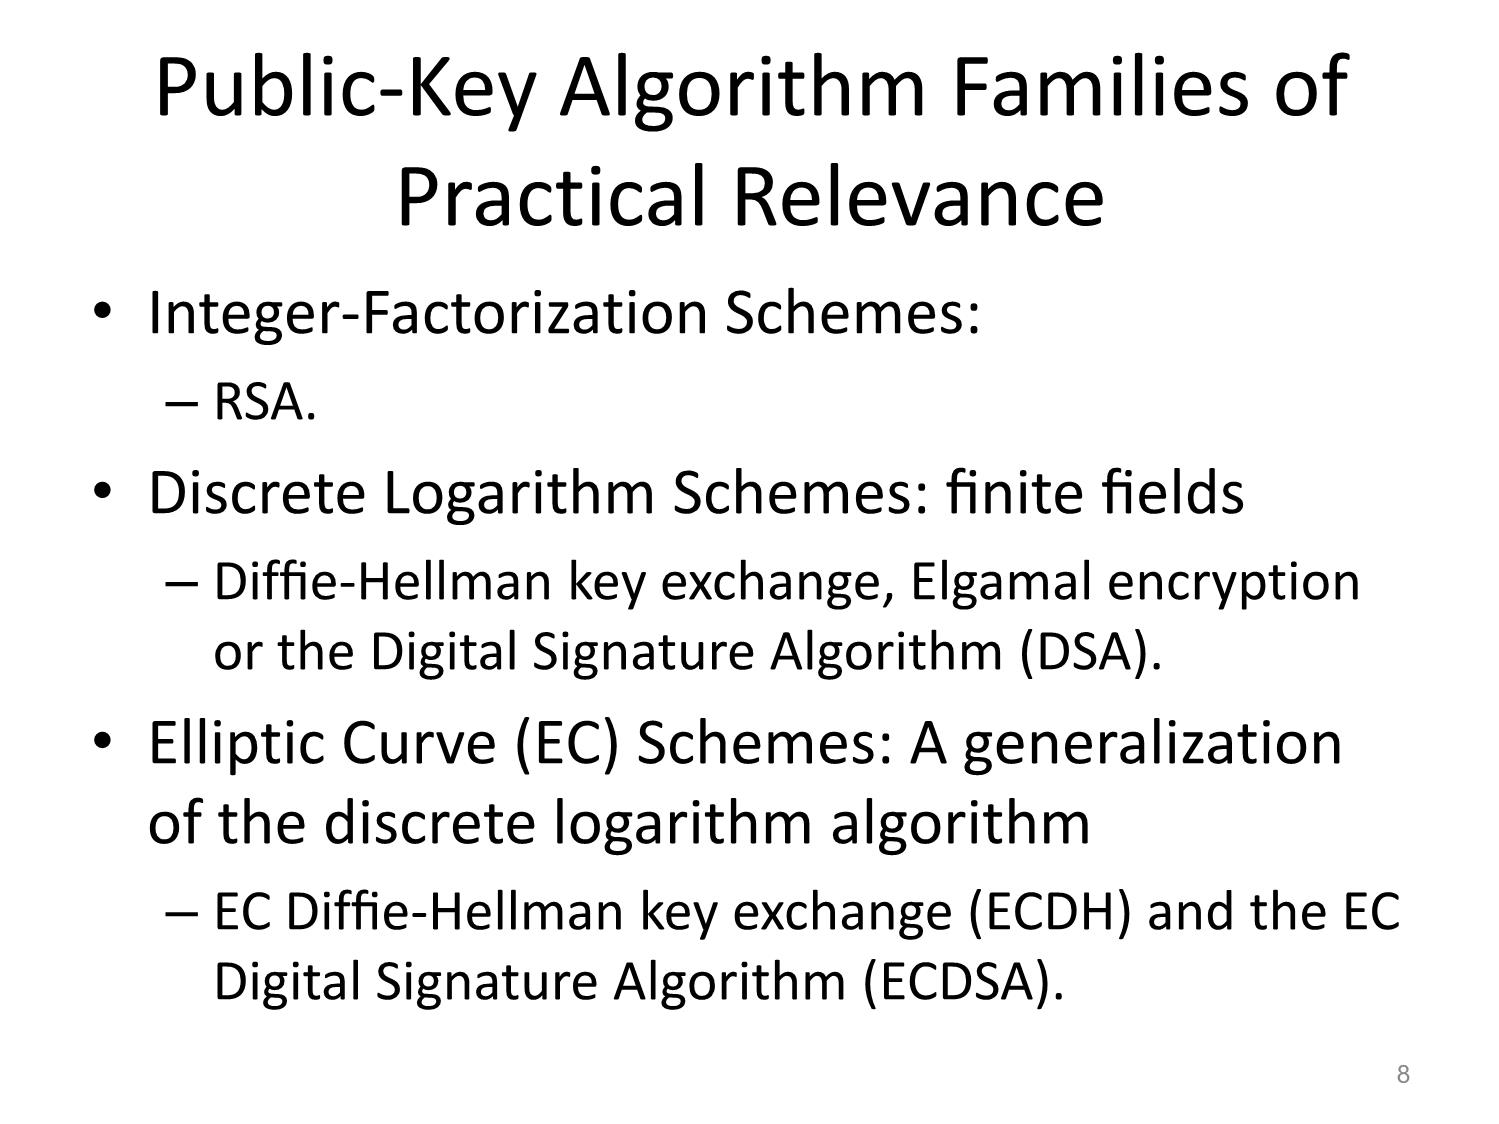 Public - Key cryptography trang 8